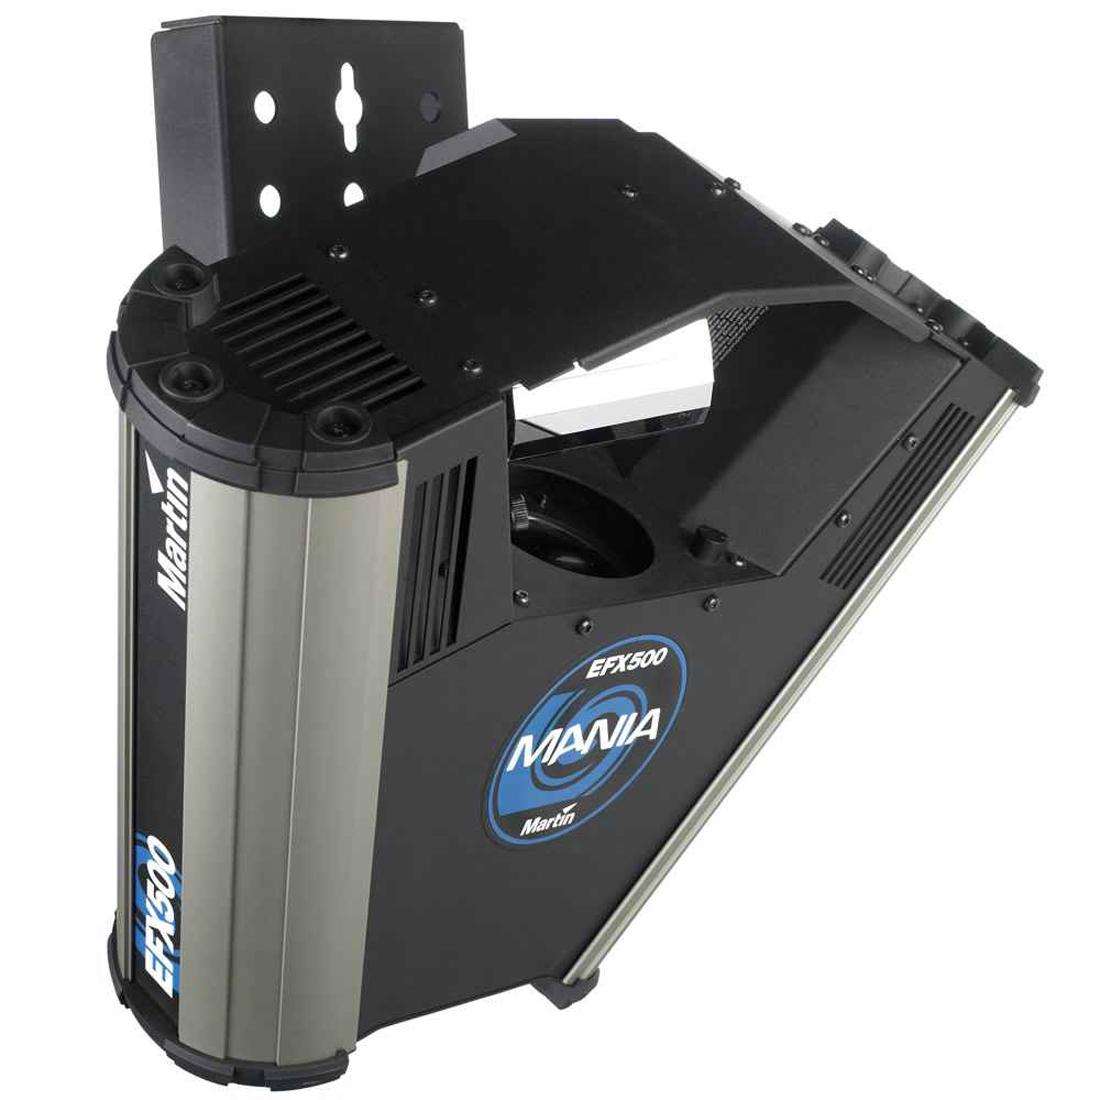 Сканер MARTIN PRO Mania EFX500